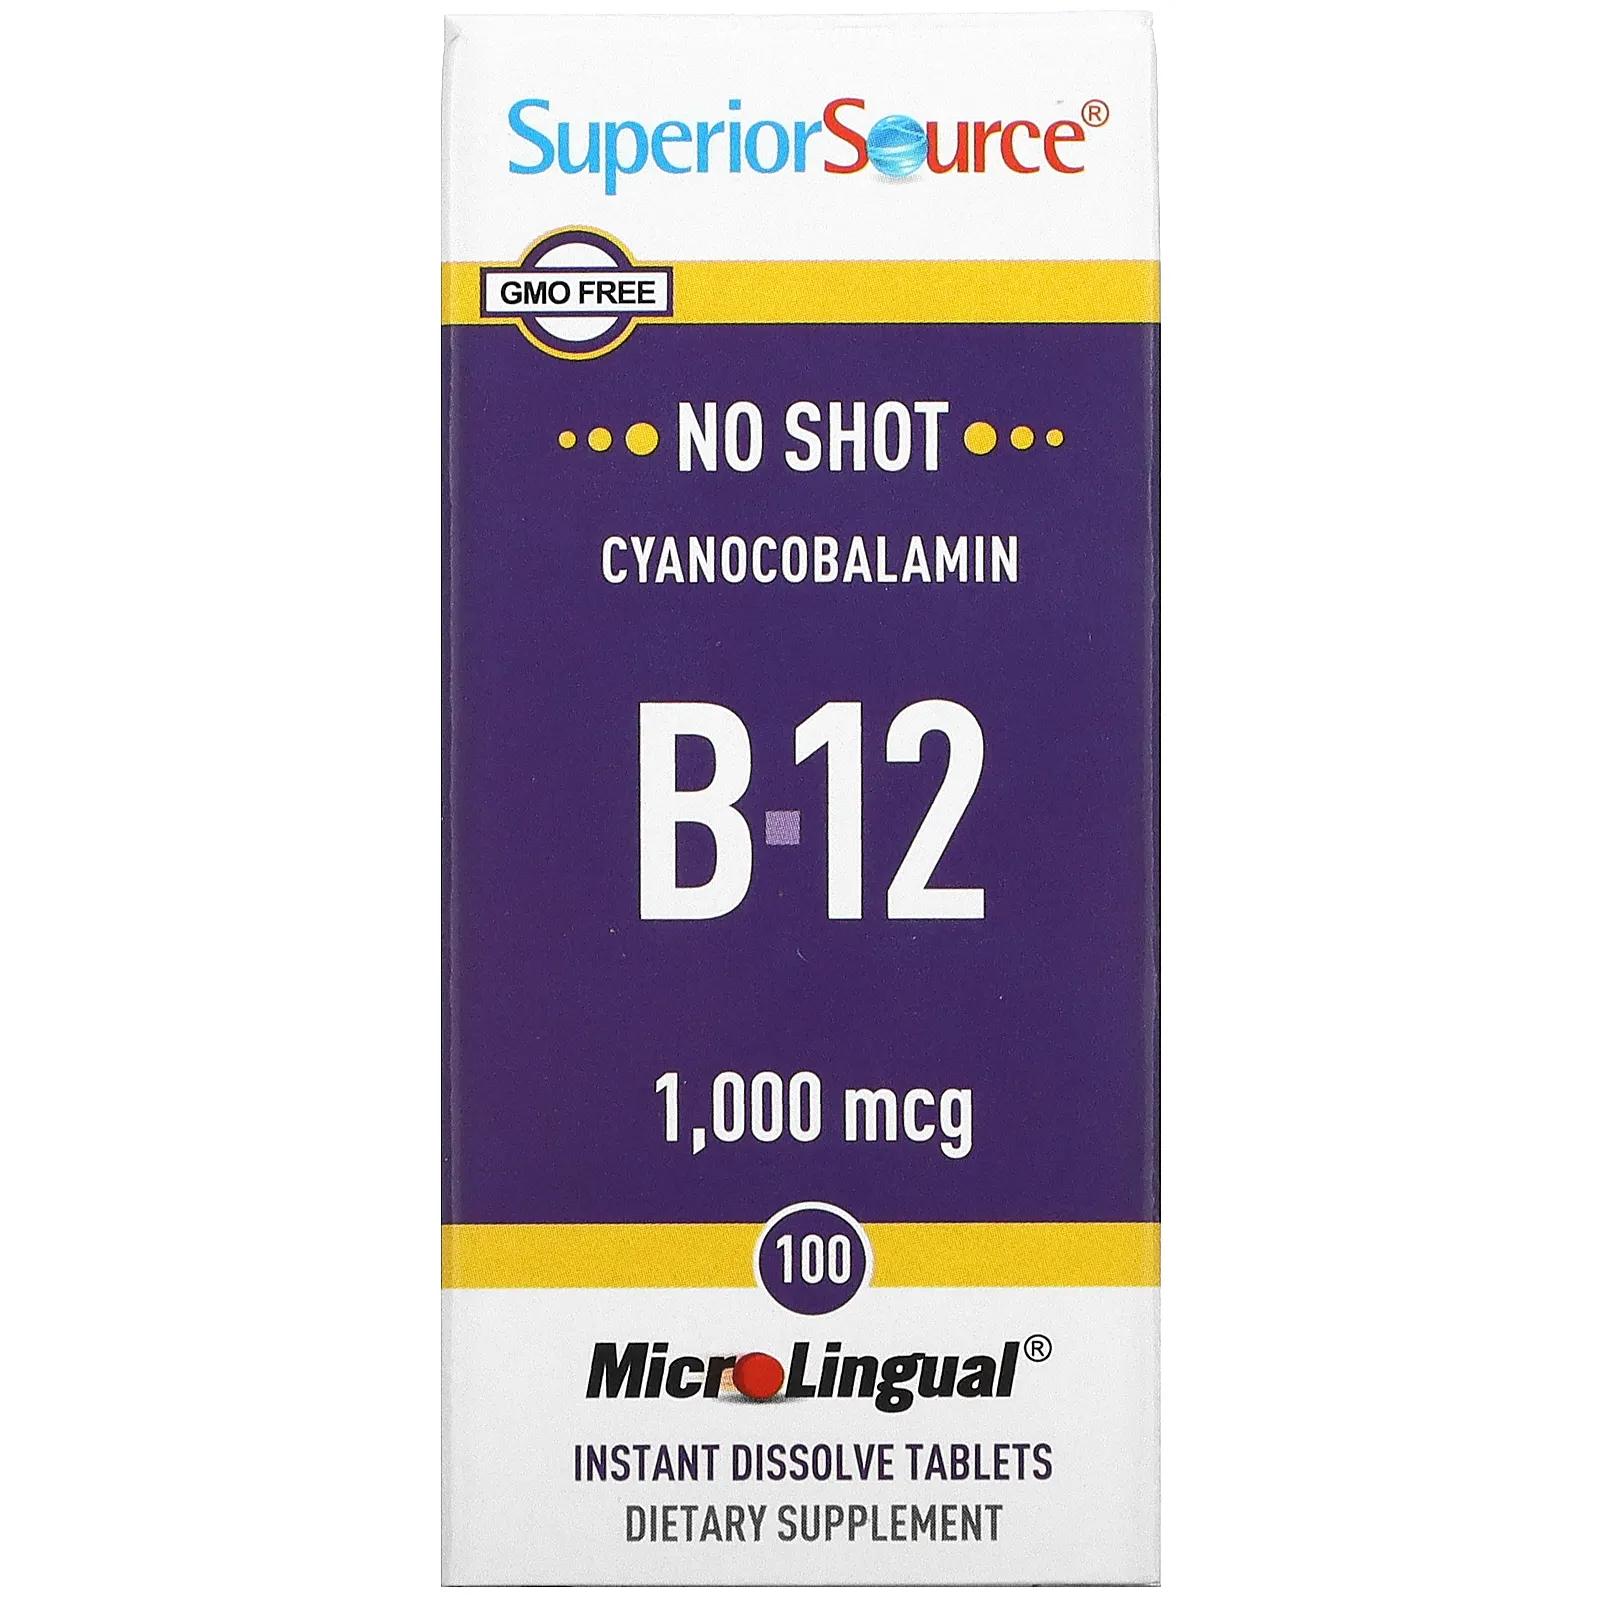 Superior Source MicroLingual цианокобаламин B12 1000 мкг 100 таблеток superior source метилфолат 1000 мкг 60 быстрорассасывающихся компактных таблеток microlingual